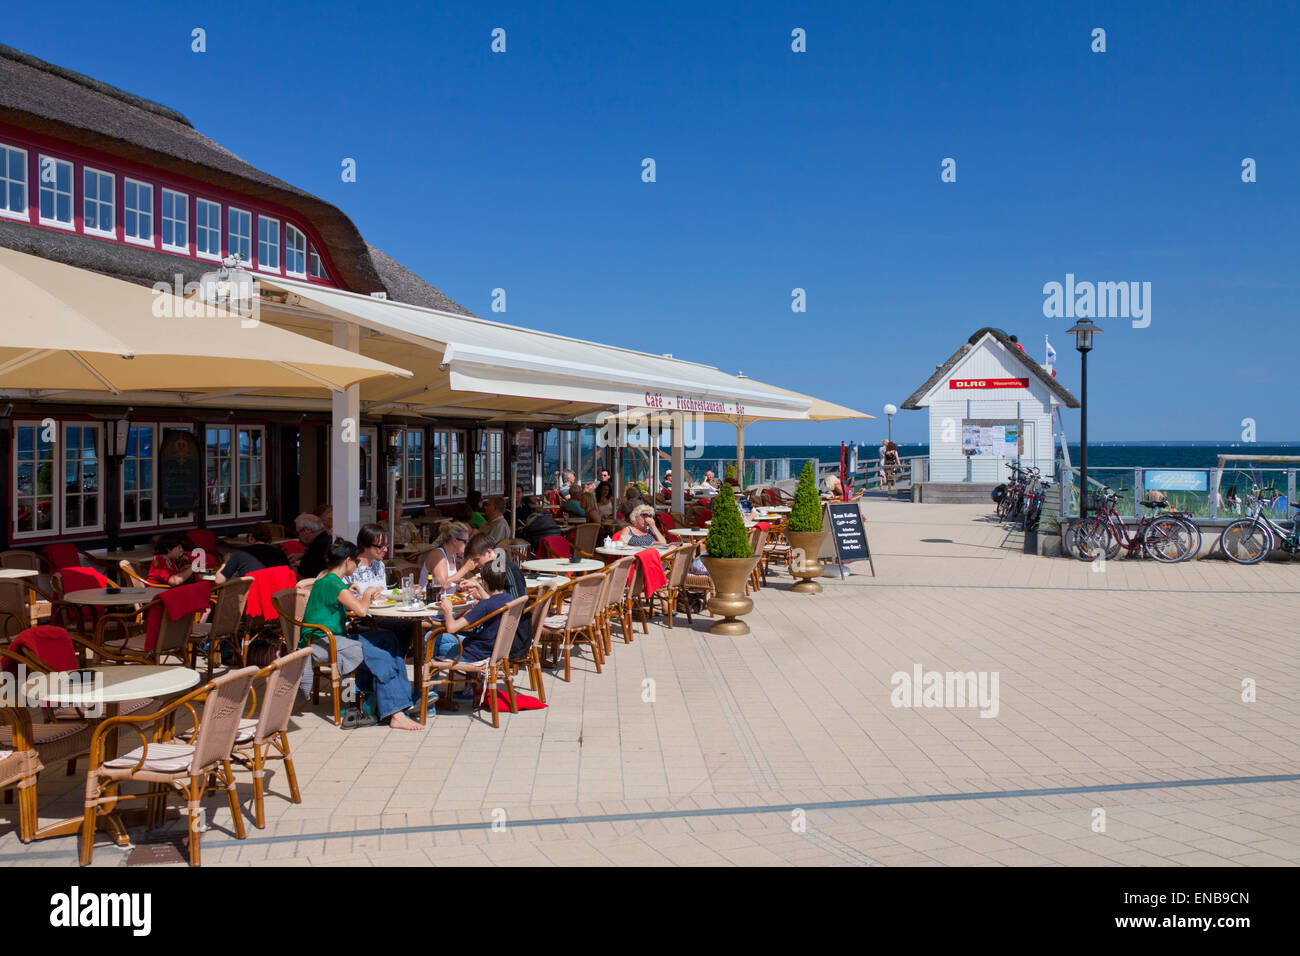 Café restaurant along the promenade at the seaside resort Haffkrug, Scharbeutz, Schleswig-Holstein, Germany Stock Photo